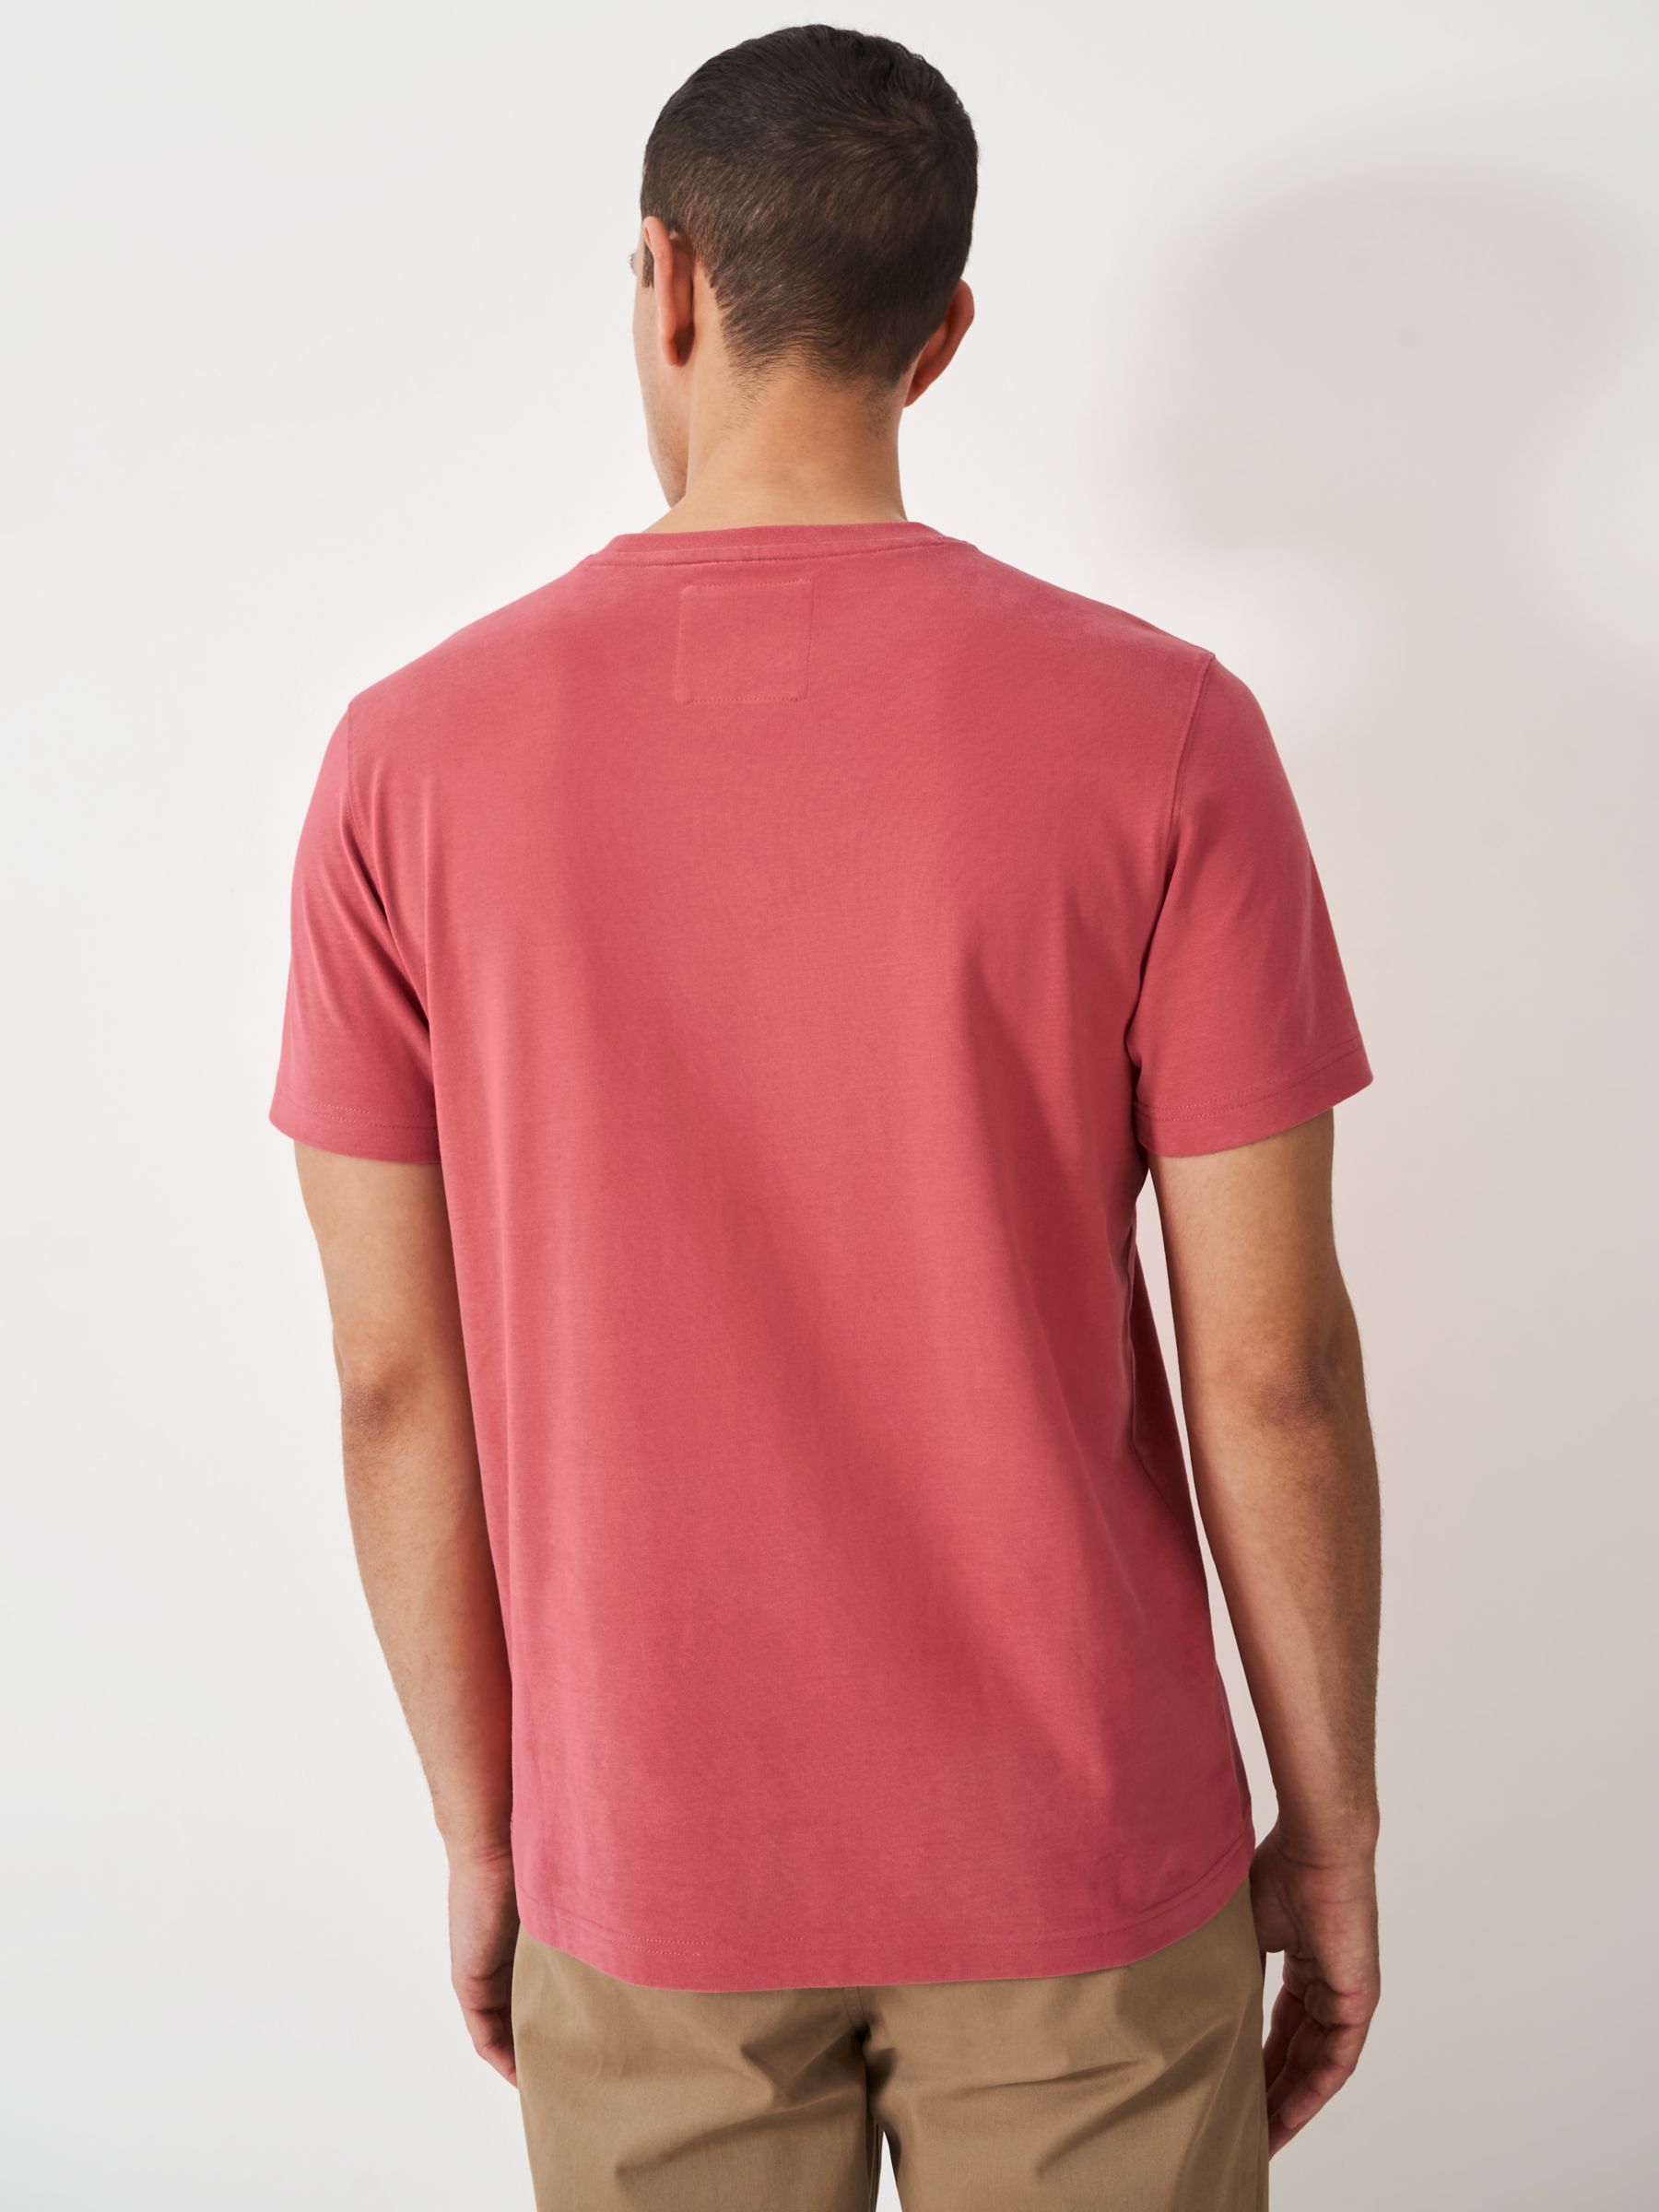 Crew Clothing Crew Neck T-Shirt, Mid Pink, XS